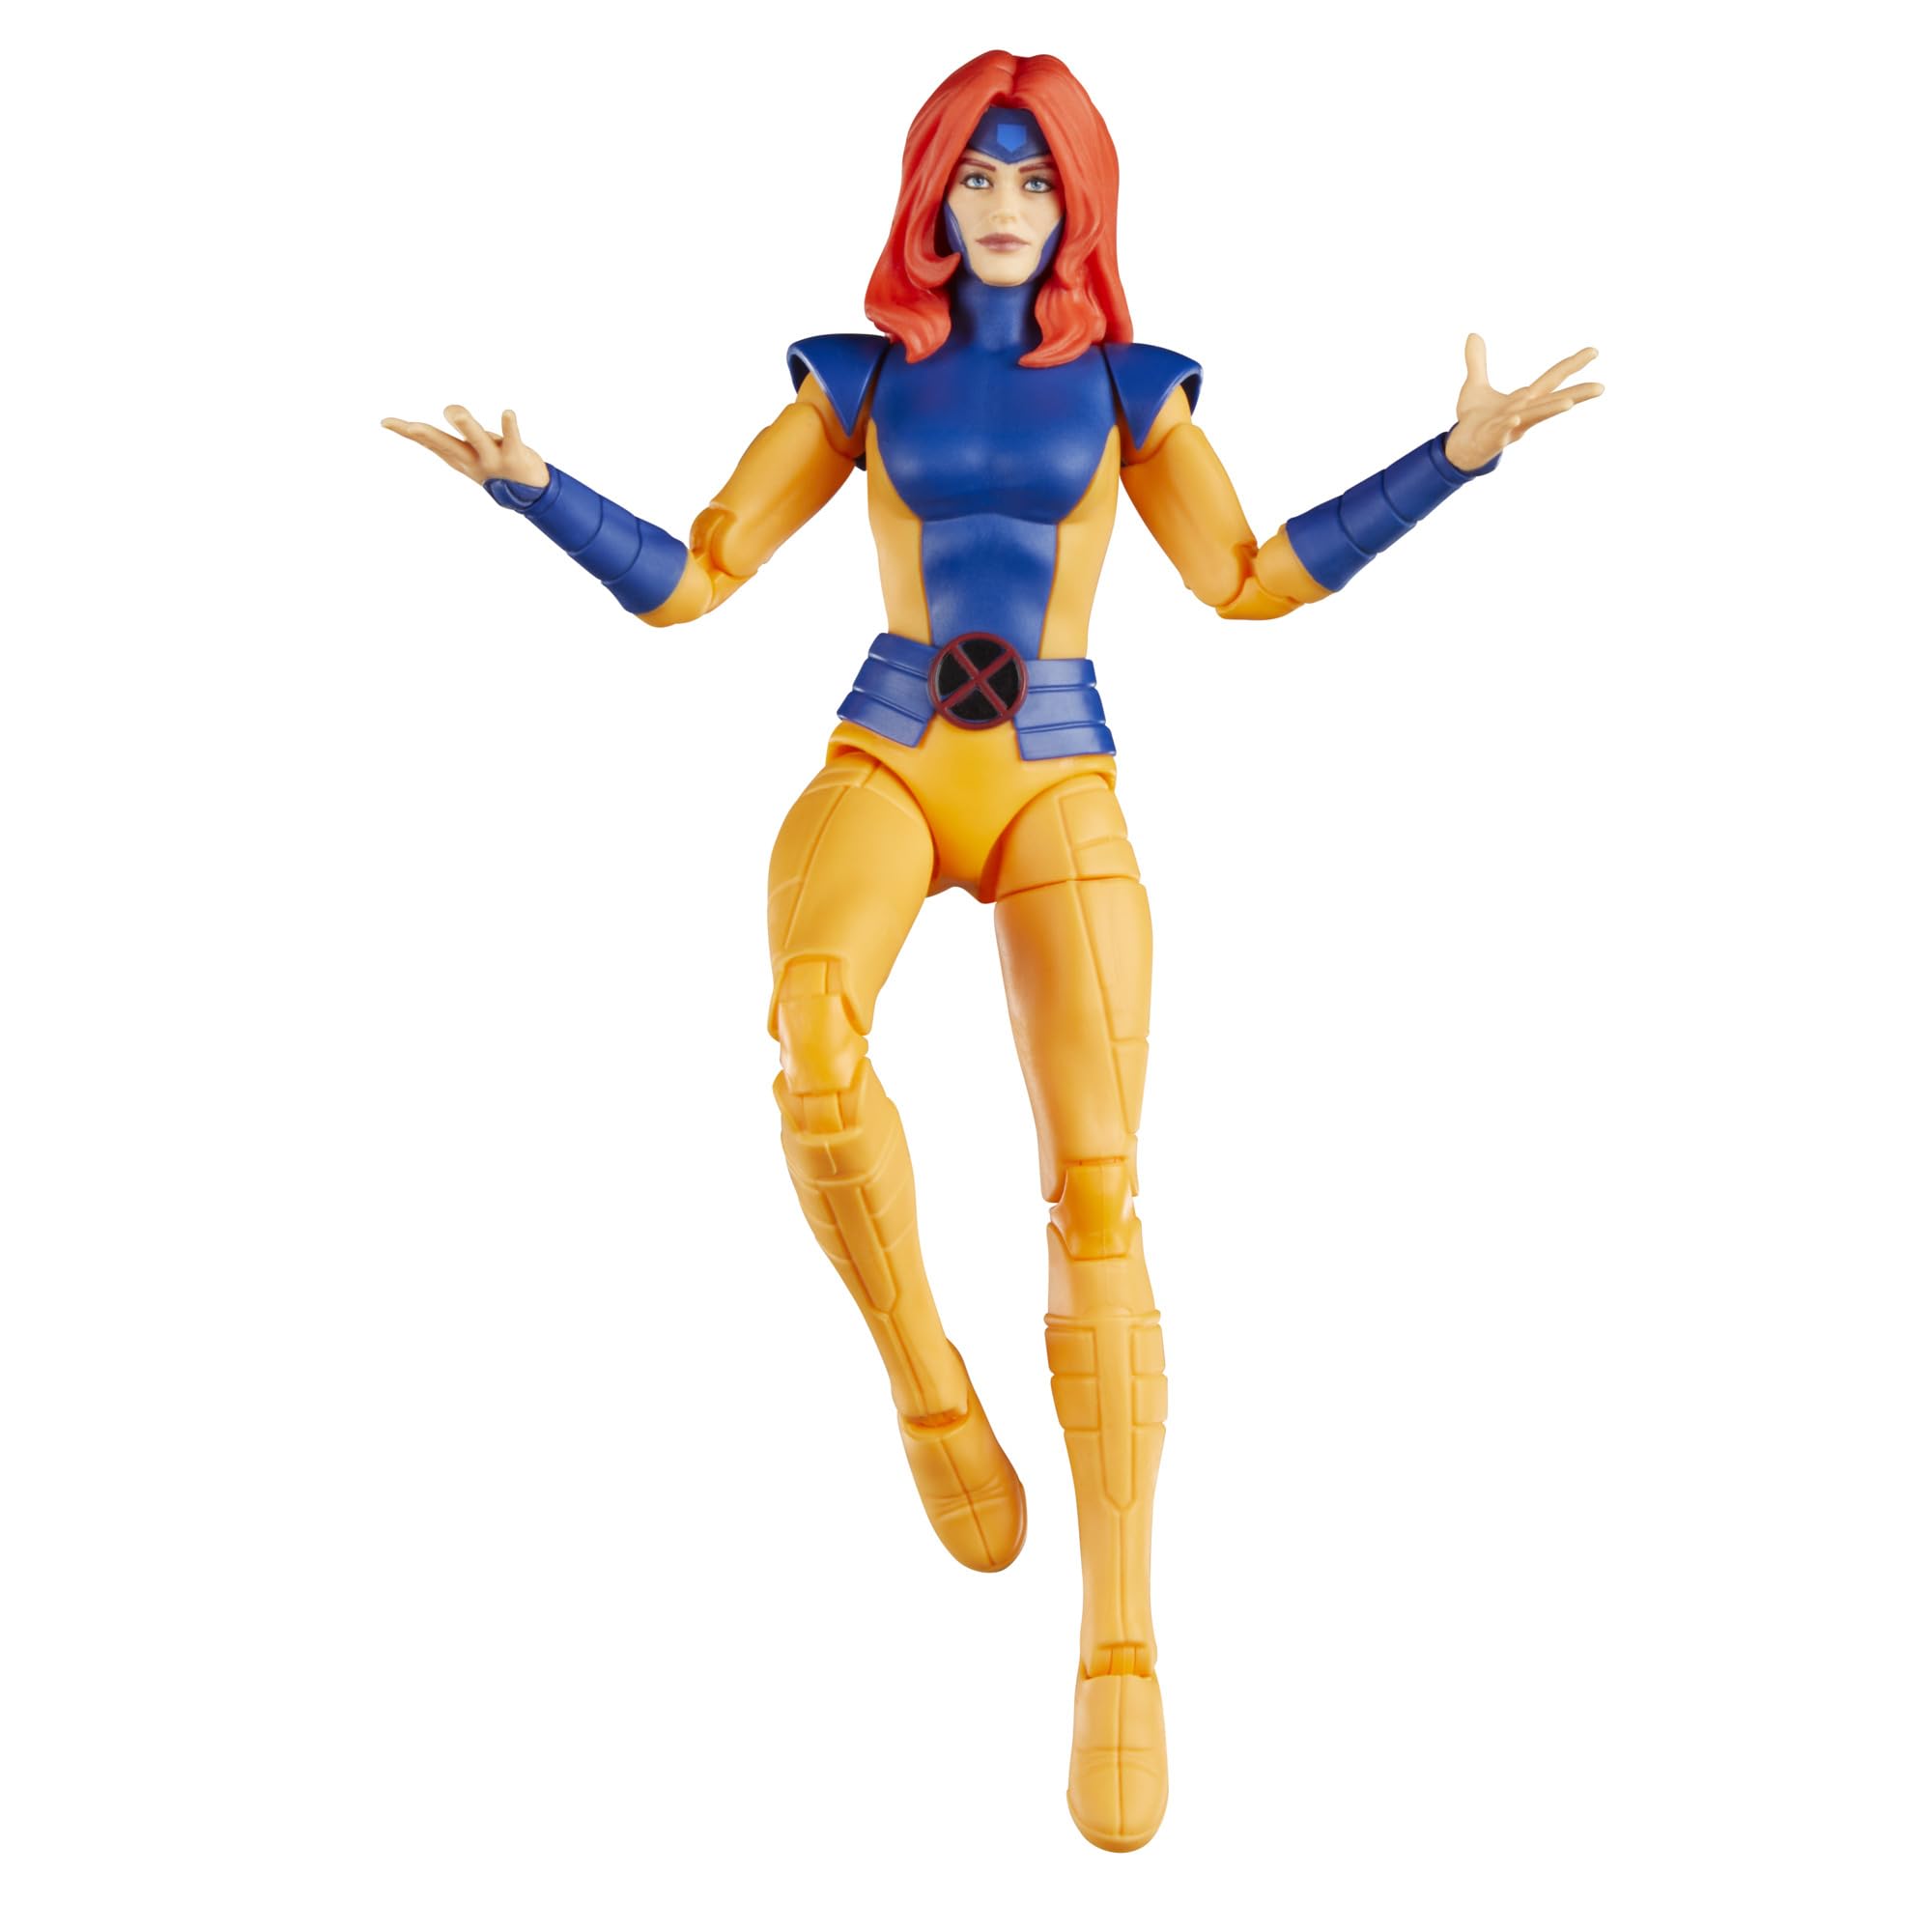 Marvel Legends Series Jean Grey, X-Men ‘97 Collectible 6-Inch Action Figure